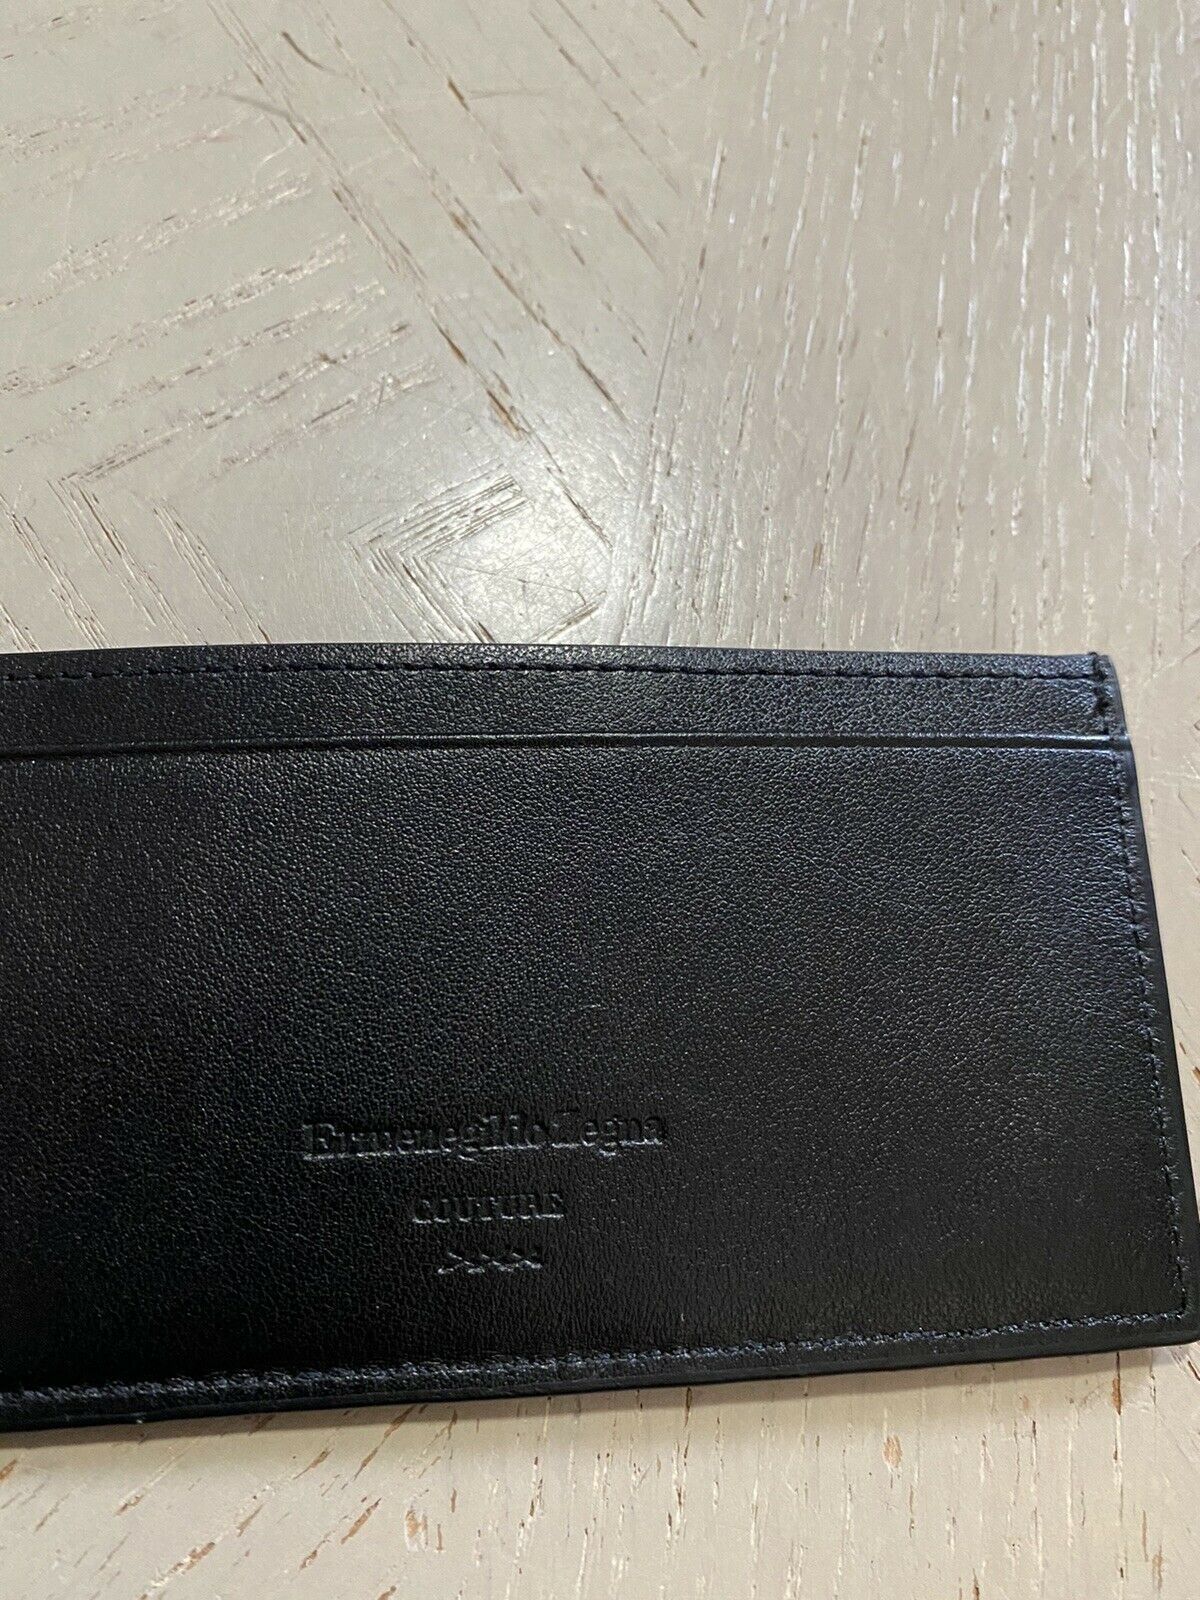 New $750 Ermenegildo Zegna Couture Pouch Wallet Black Italy